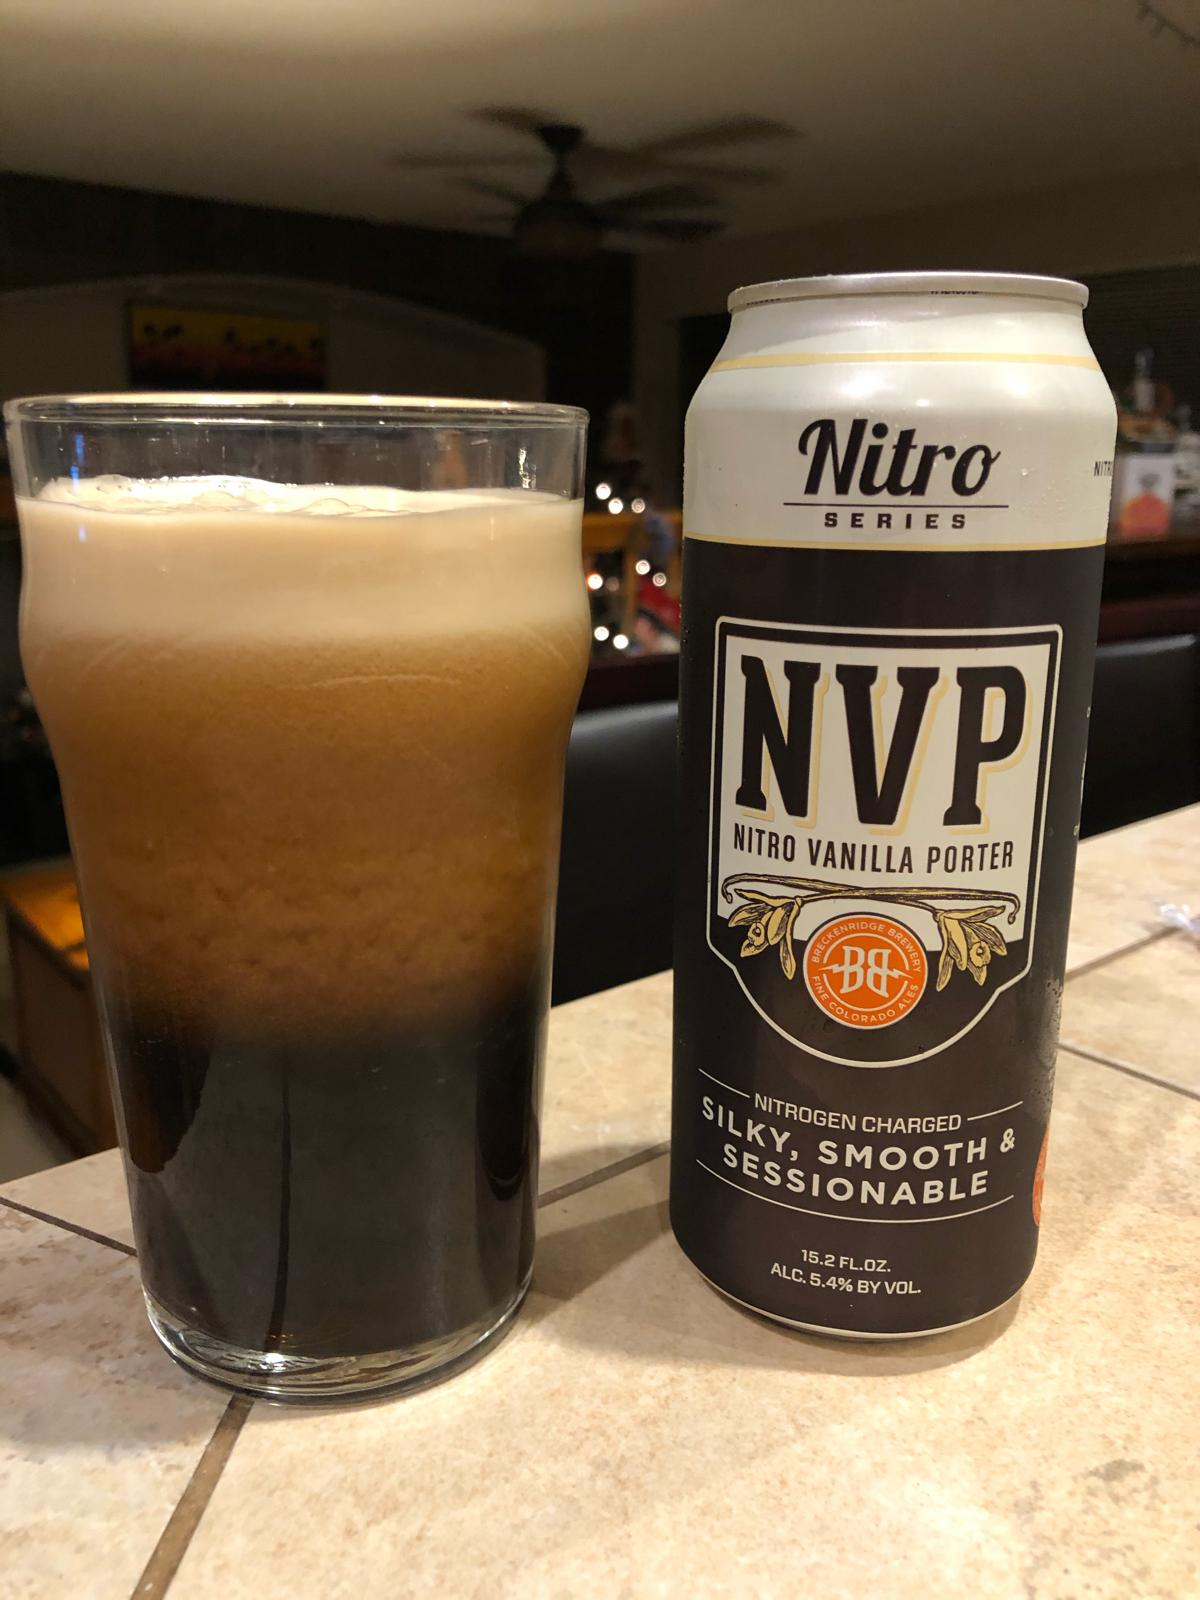 NVP (Nitro Vanilla Porter)